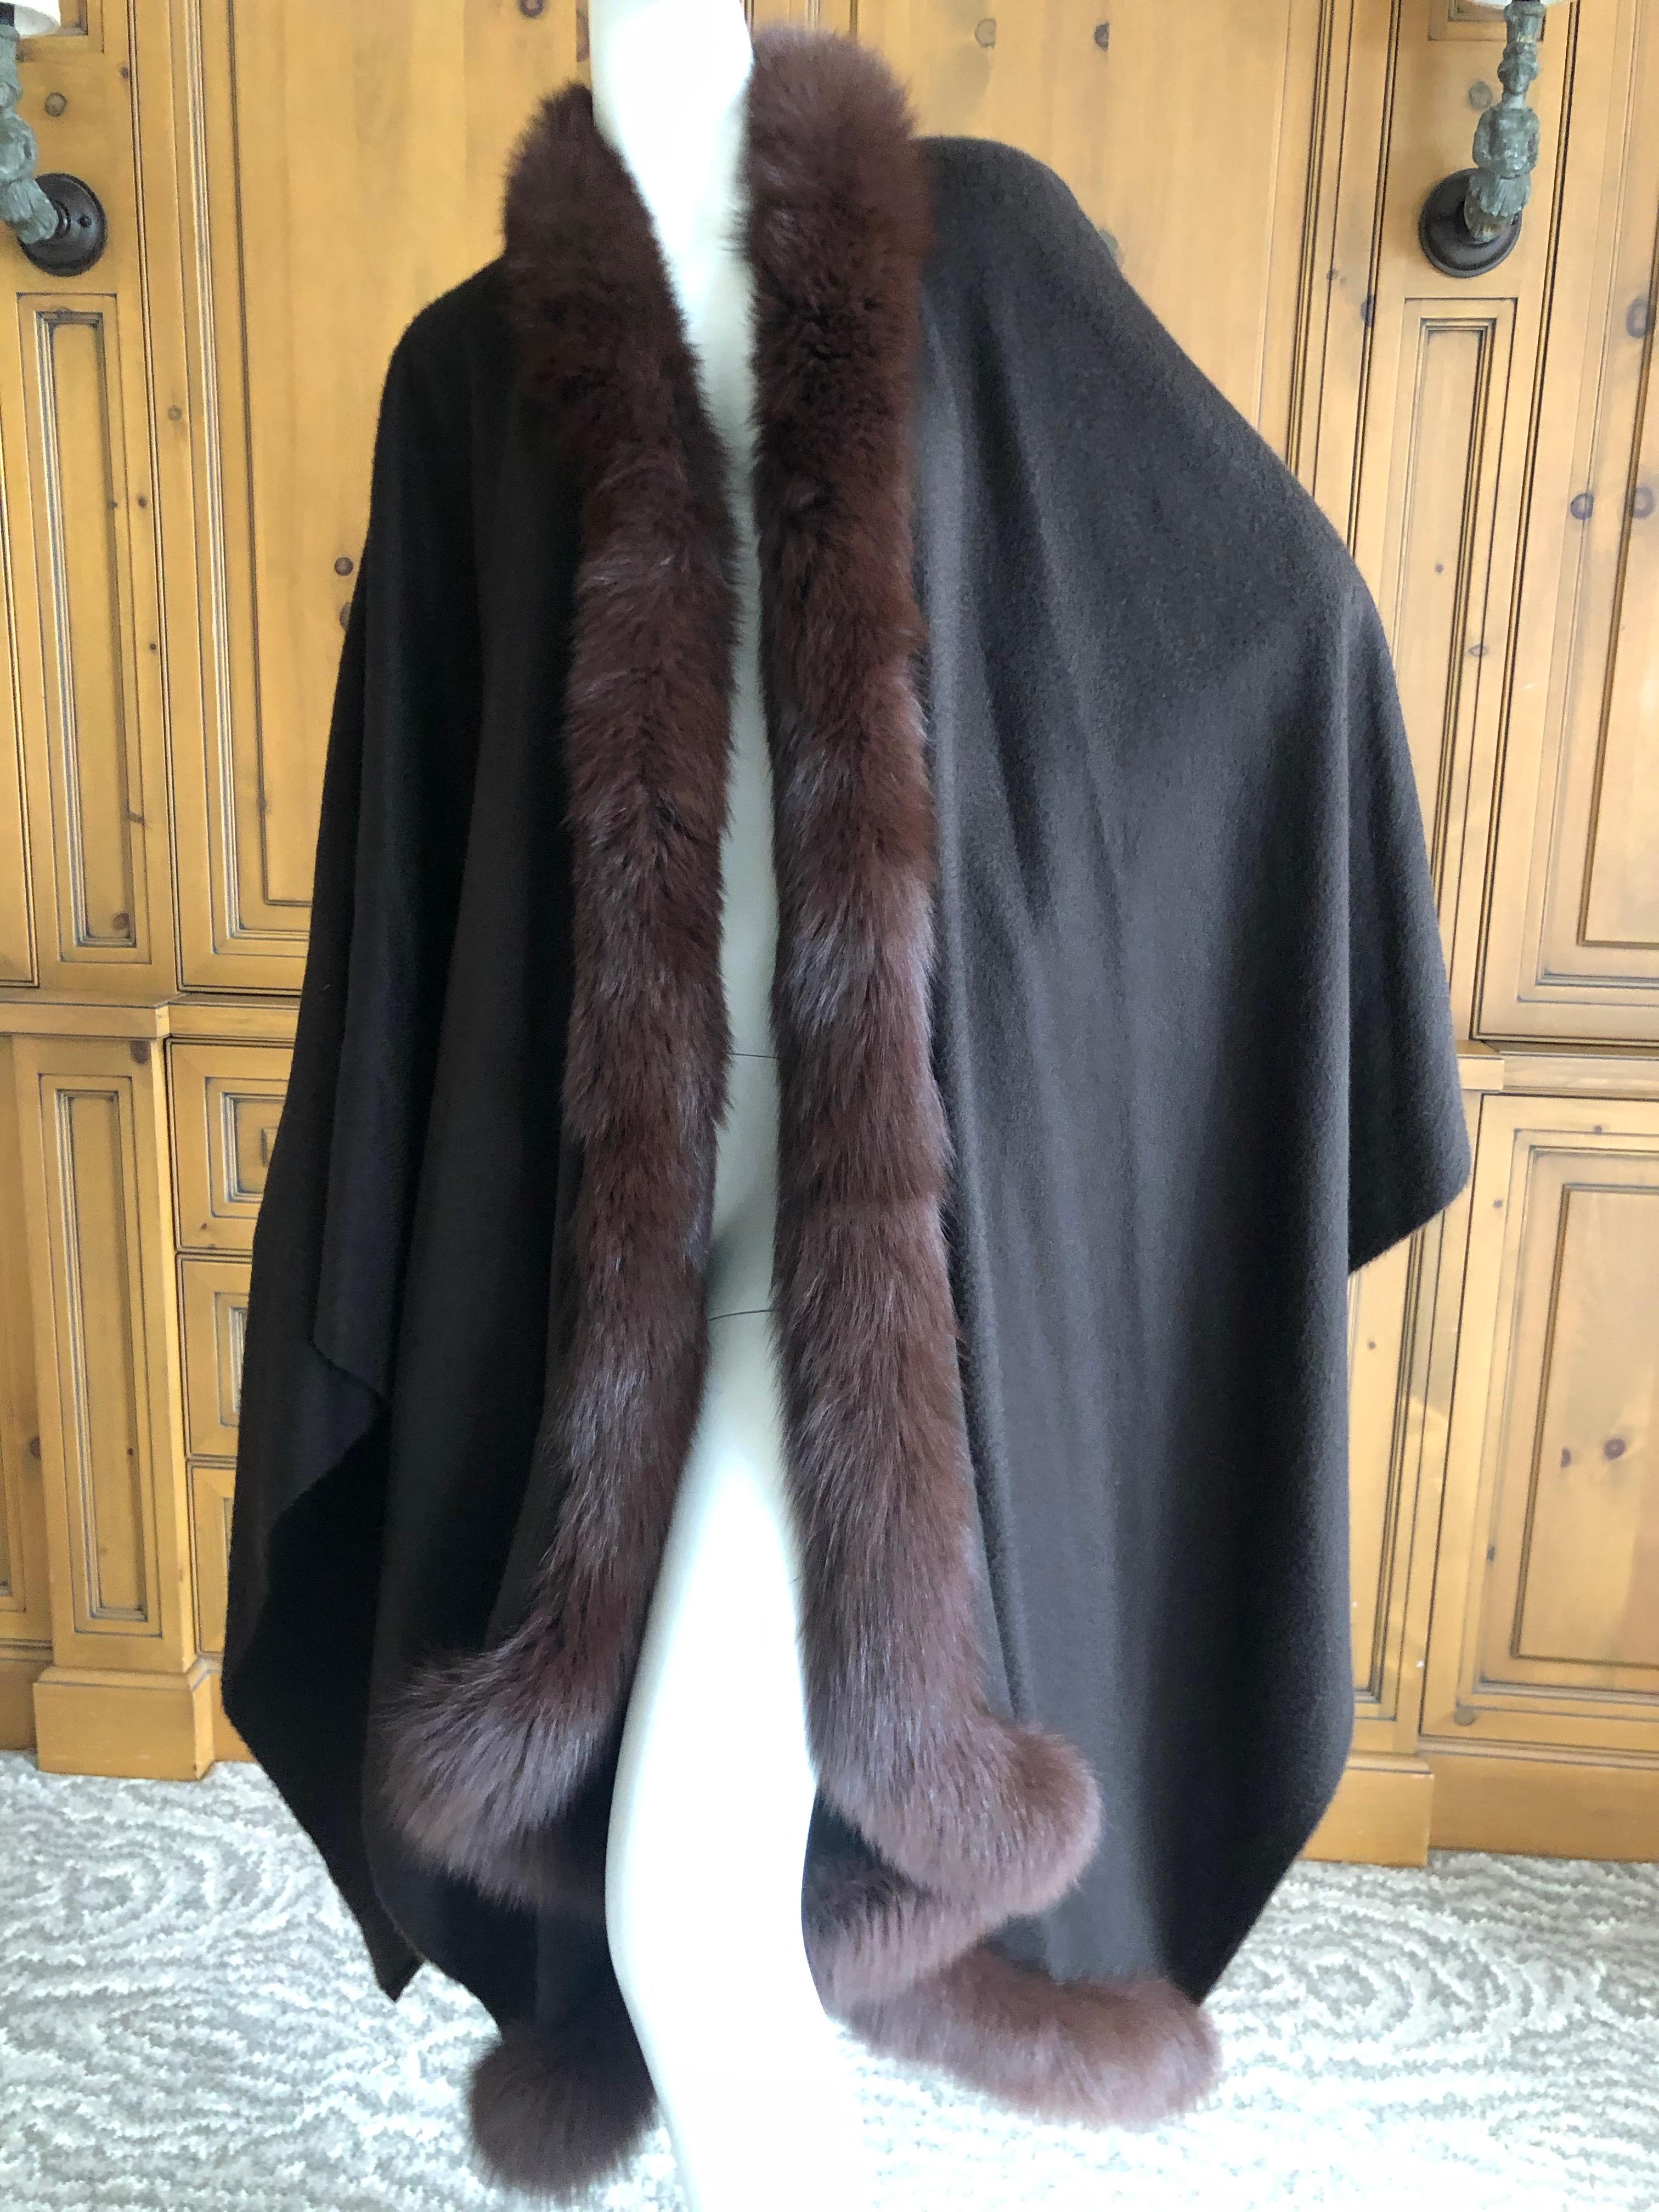 Loro Piana Brown Pure Cashmere Wrap with Fox Fur Trim
44